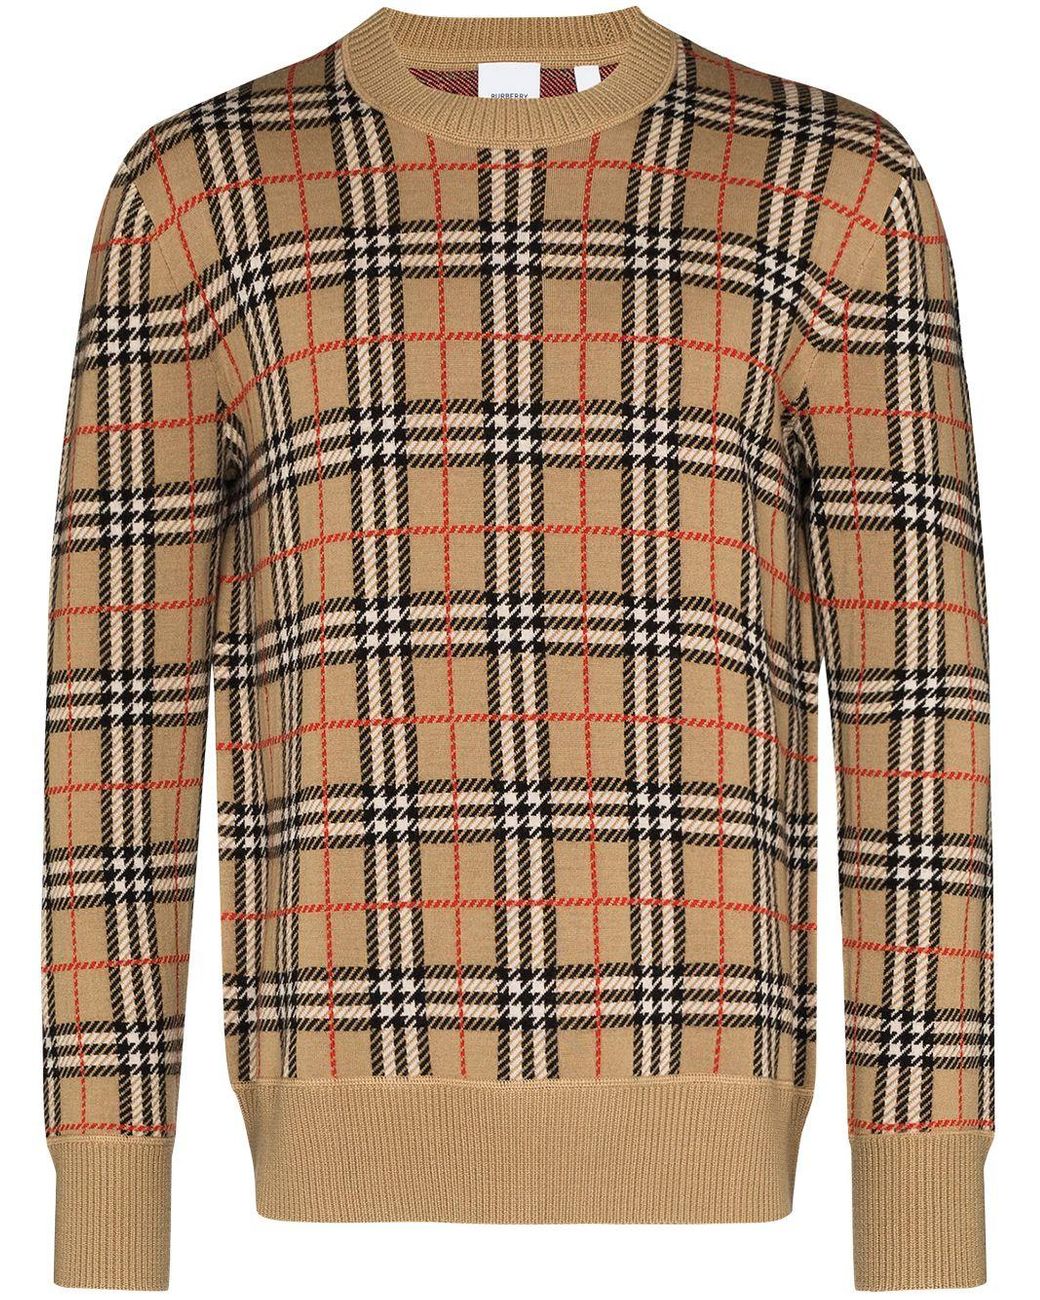 Burberry Fletcher Vintage Check Merino Wool Jumper in Brown for Men - Lyst